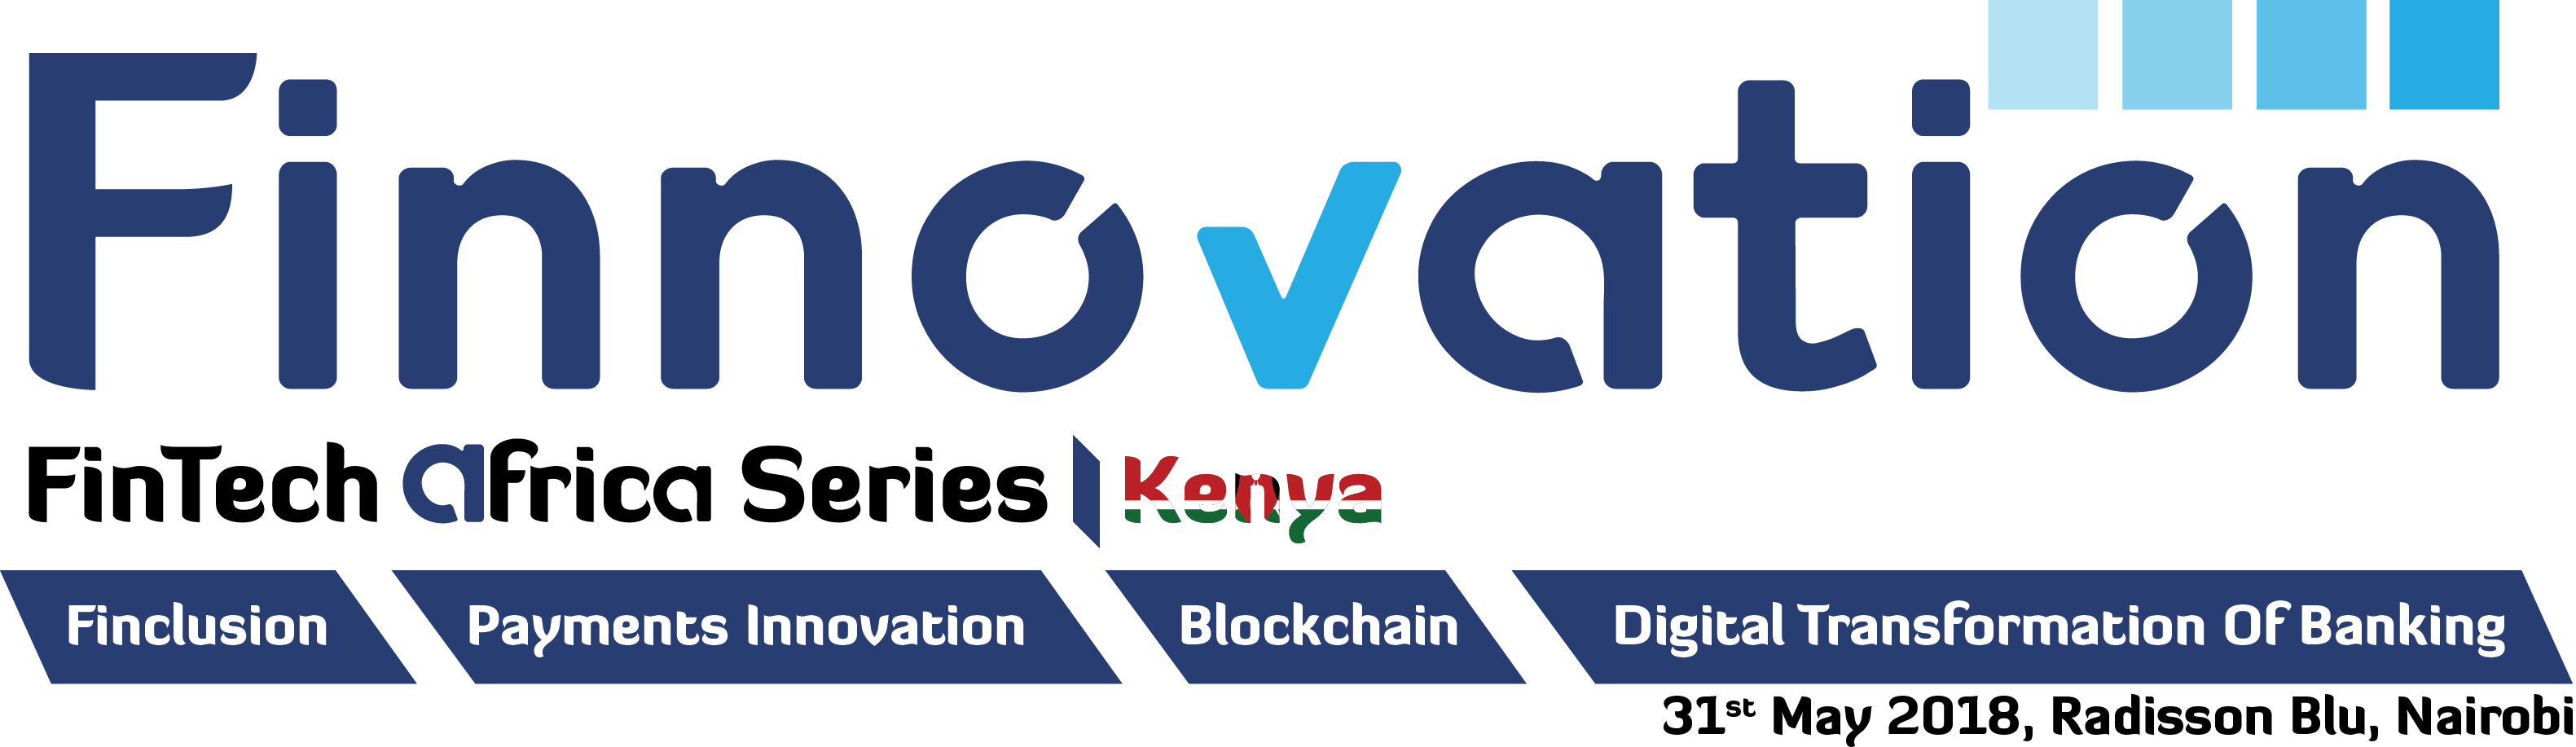 www.finnovationworld.com/kenya